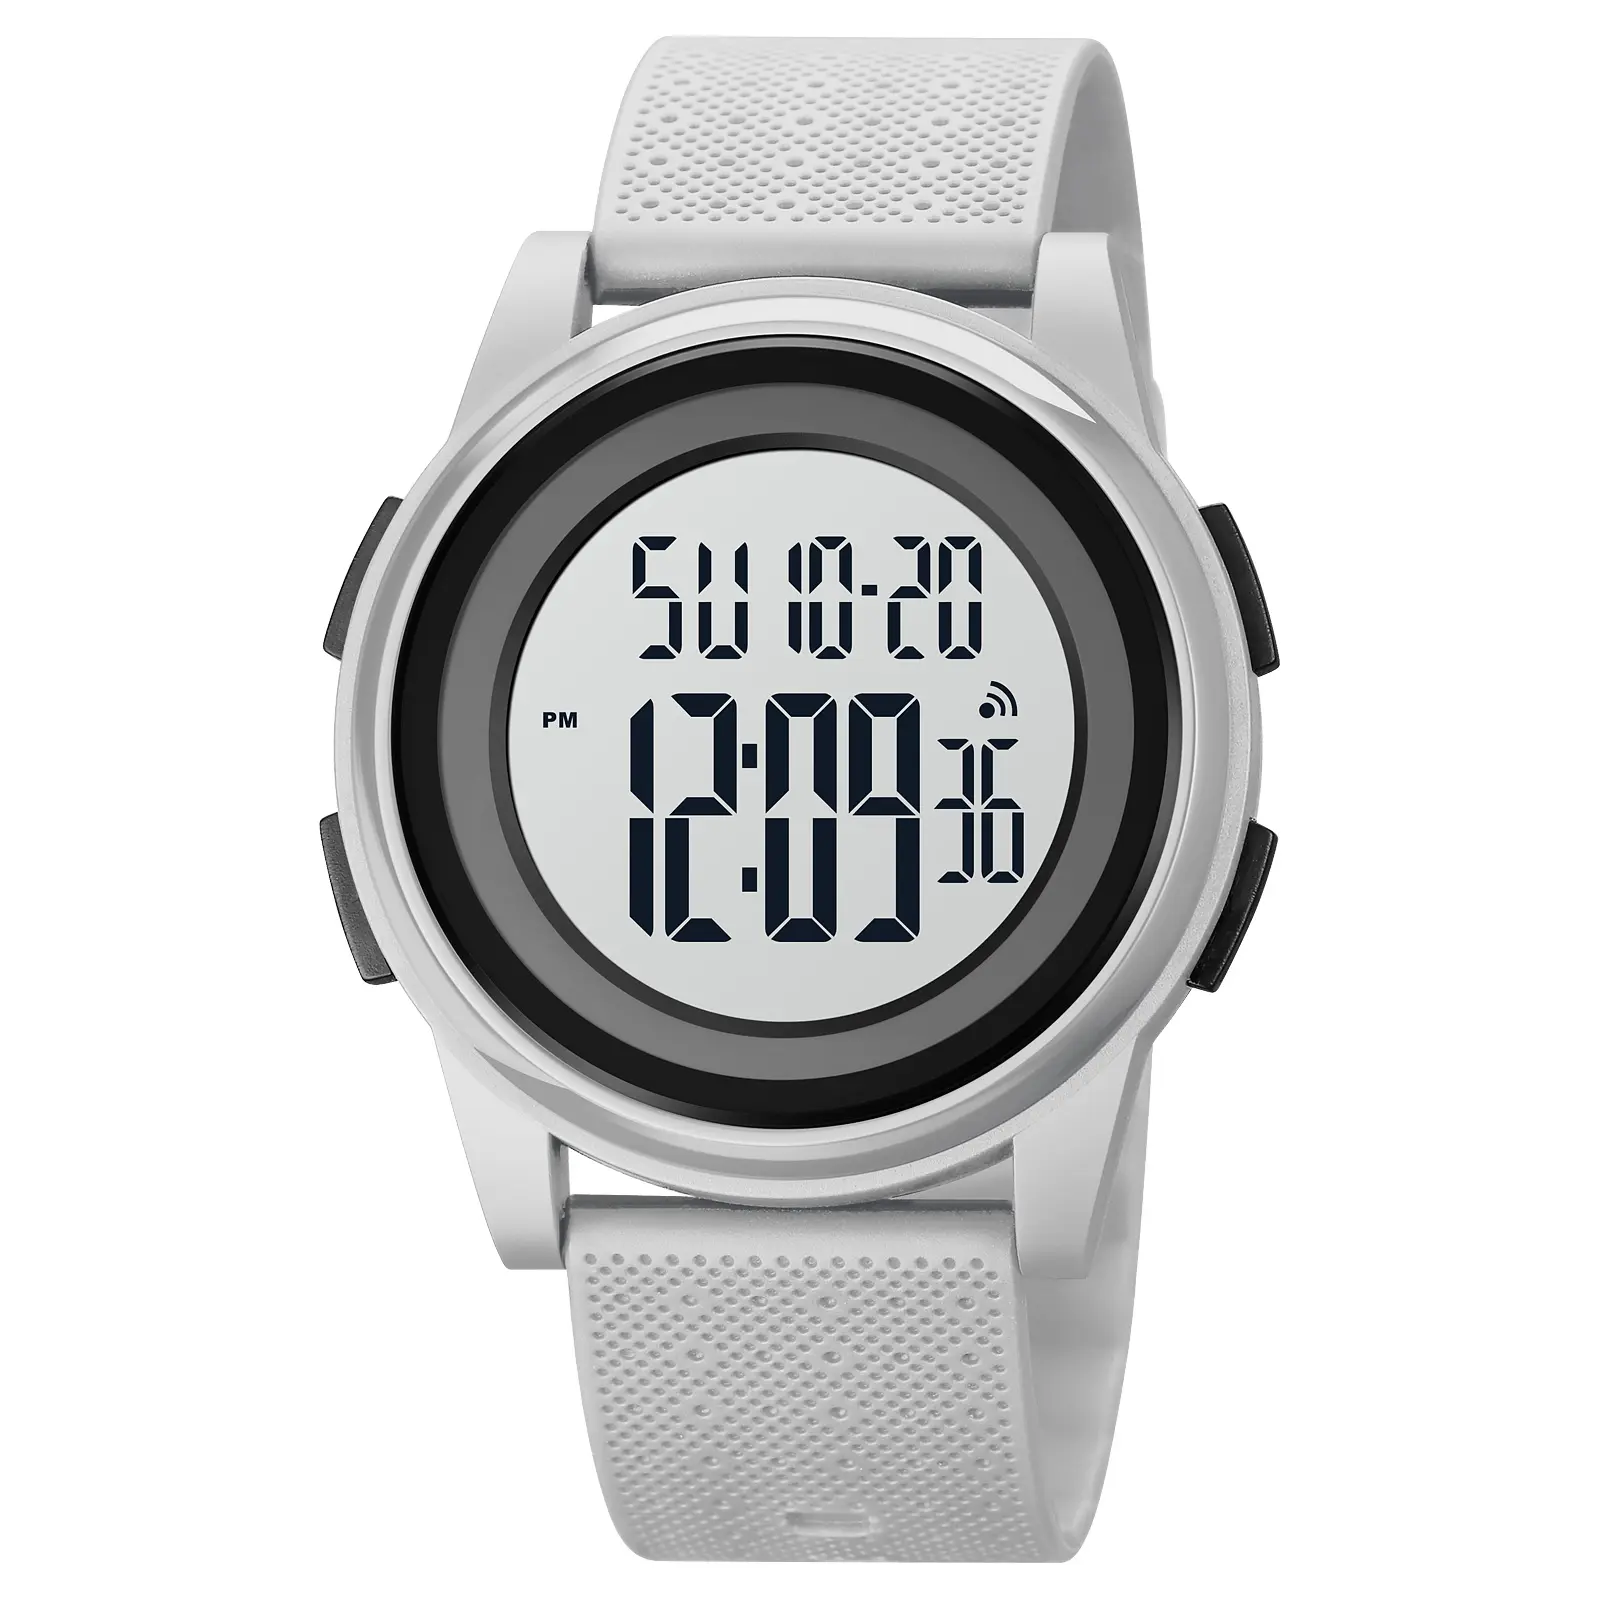 famous skmei brands 1895 low moq watch oem white label men silicone sports digital wristwatch